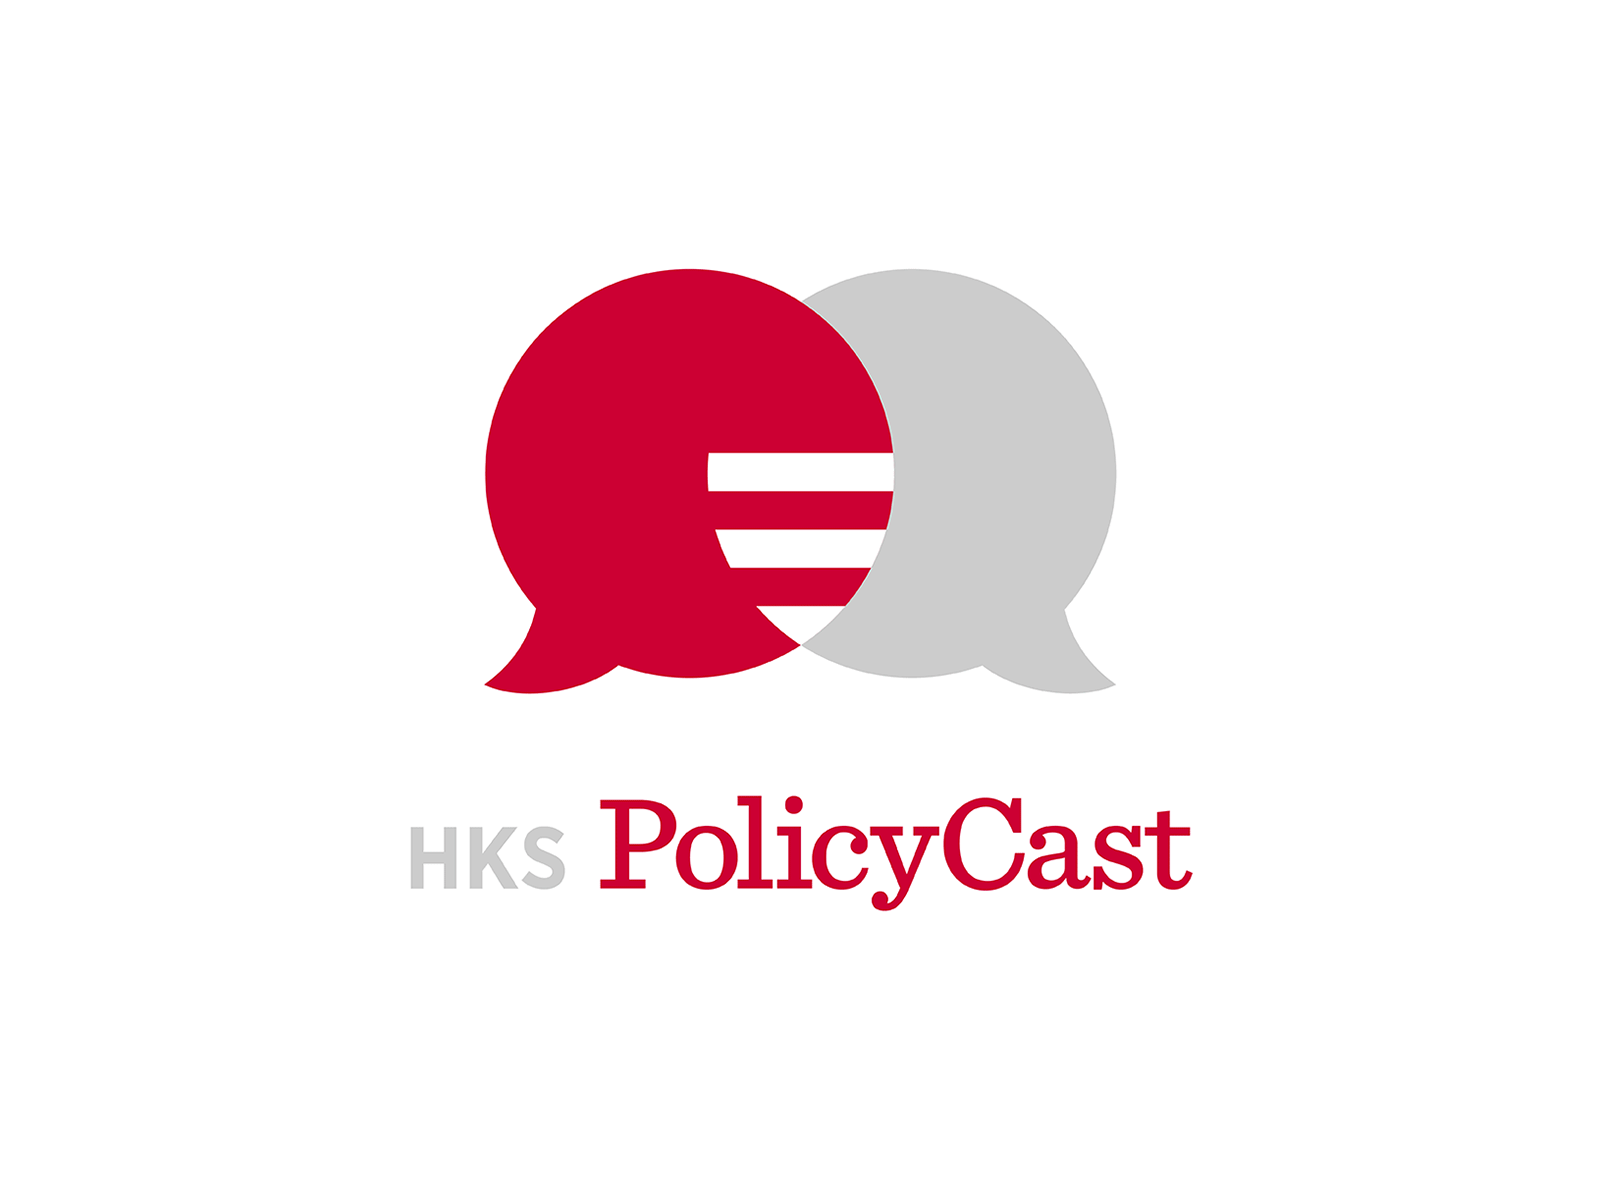 HKS PolicyCast Logo conversations democracy education logos policy